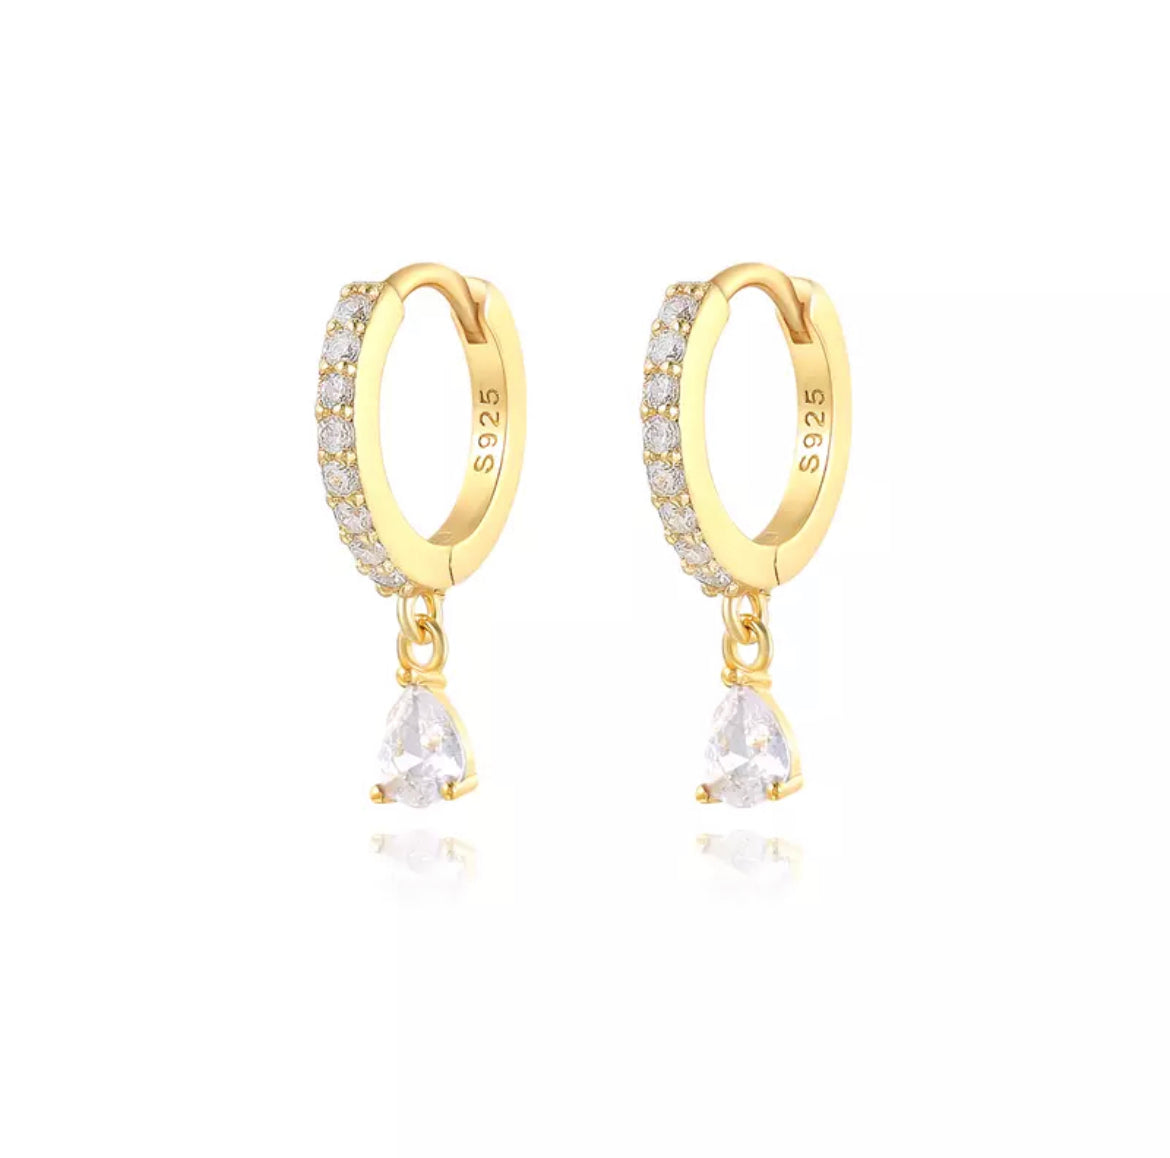 Goddess 18k Gold Vermeil Earrings - Muna Jewelz Earrings